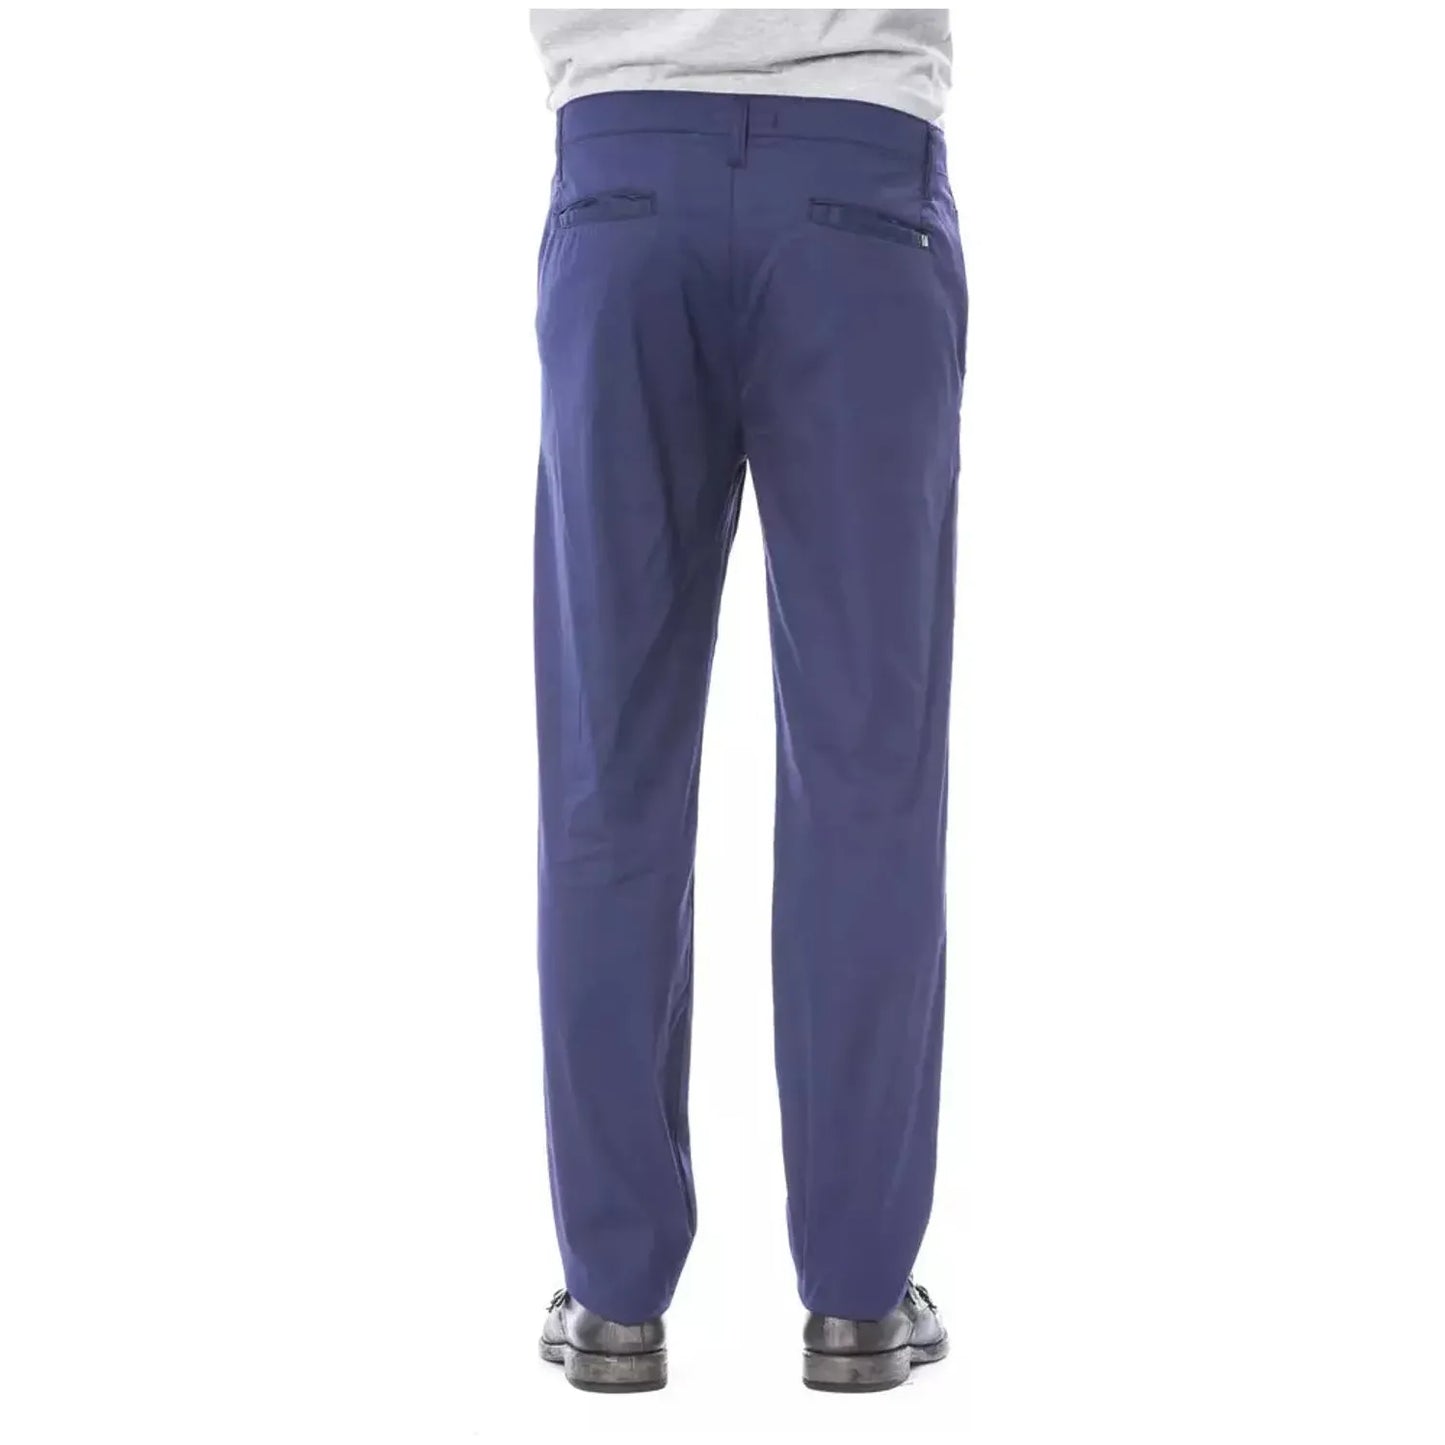 Verri Elegant Slim Fit Chino Pants in Blue blue-cotton-jeans-pant-81